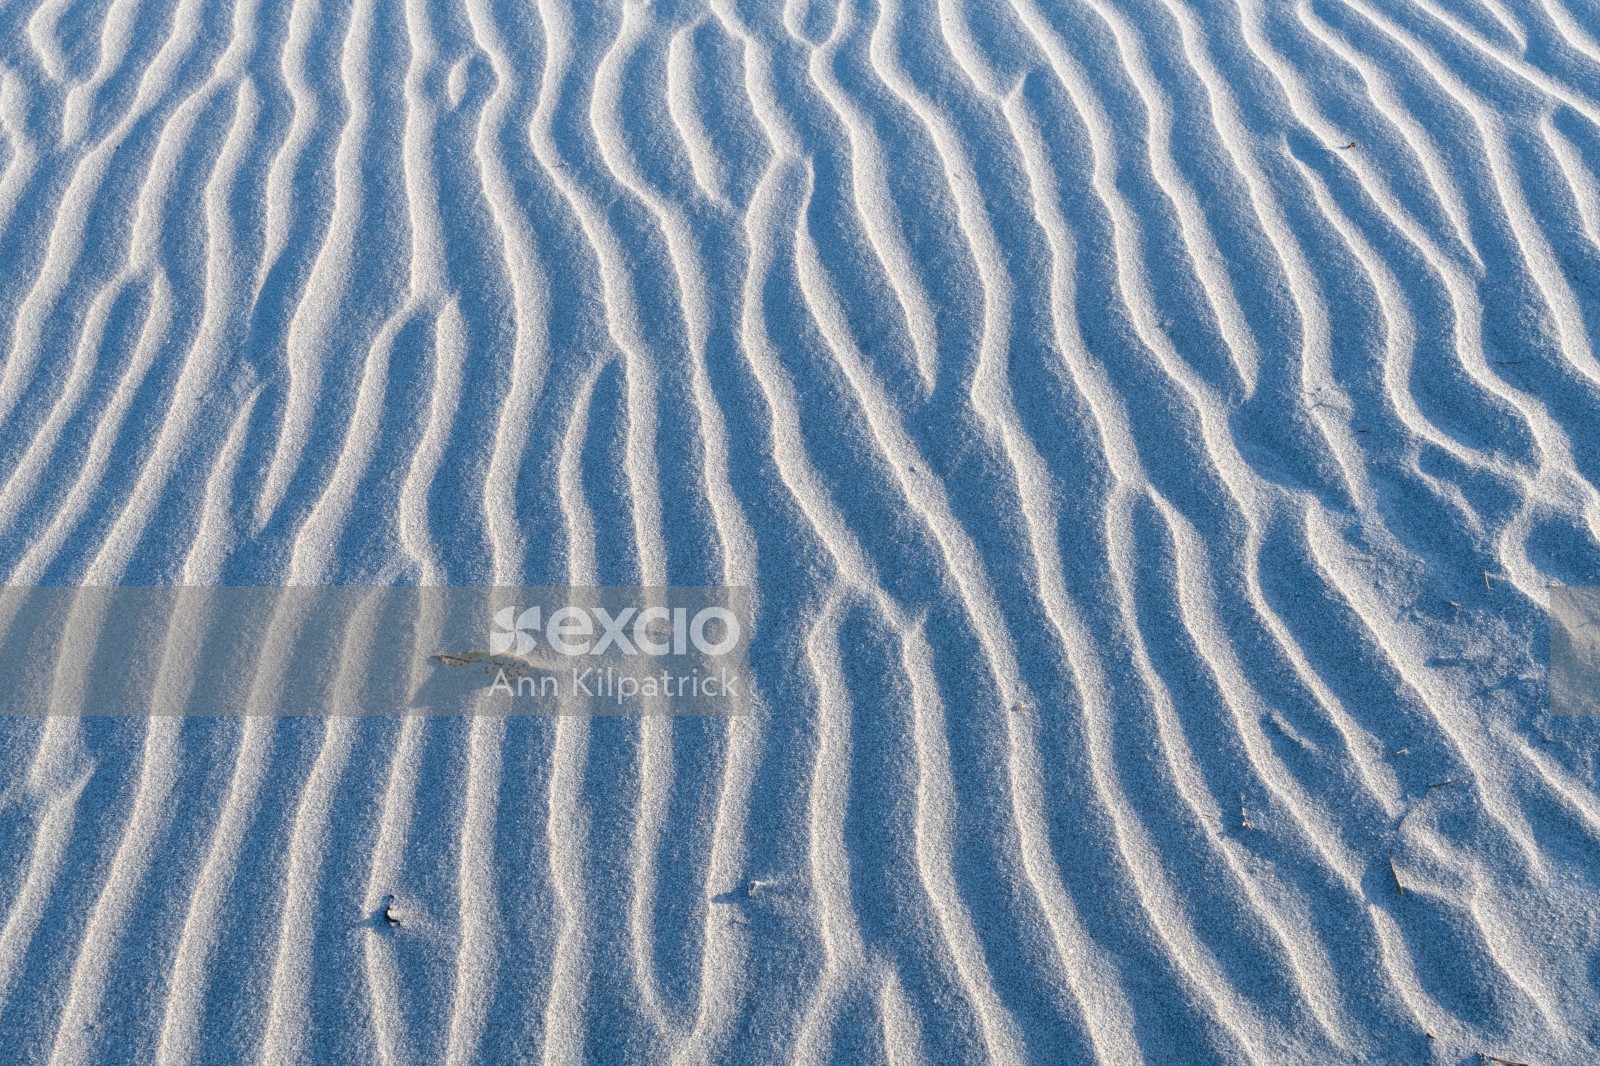 Papamoa Sand